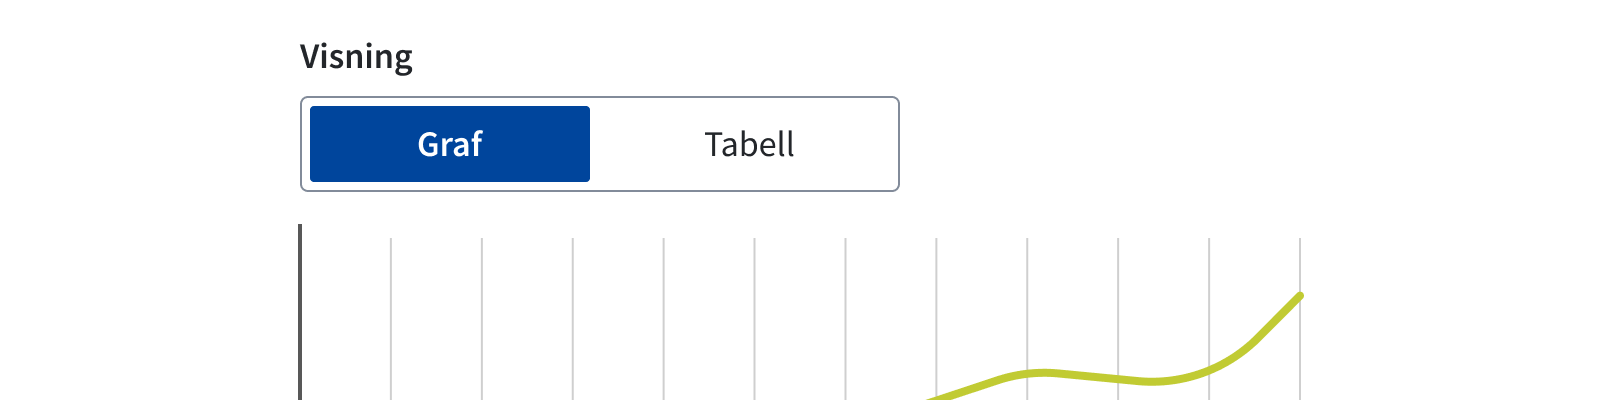 ToggleGroup som veksler mellom graf og tabell.